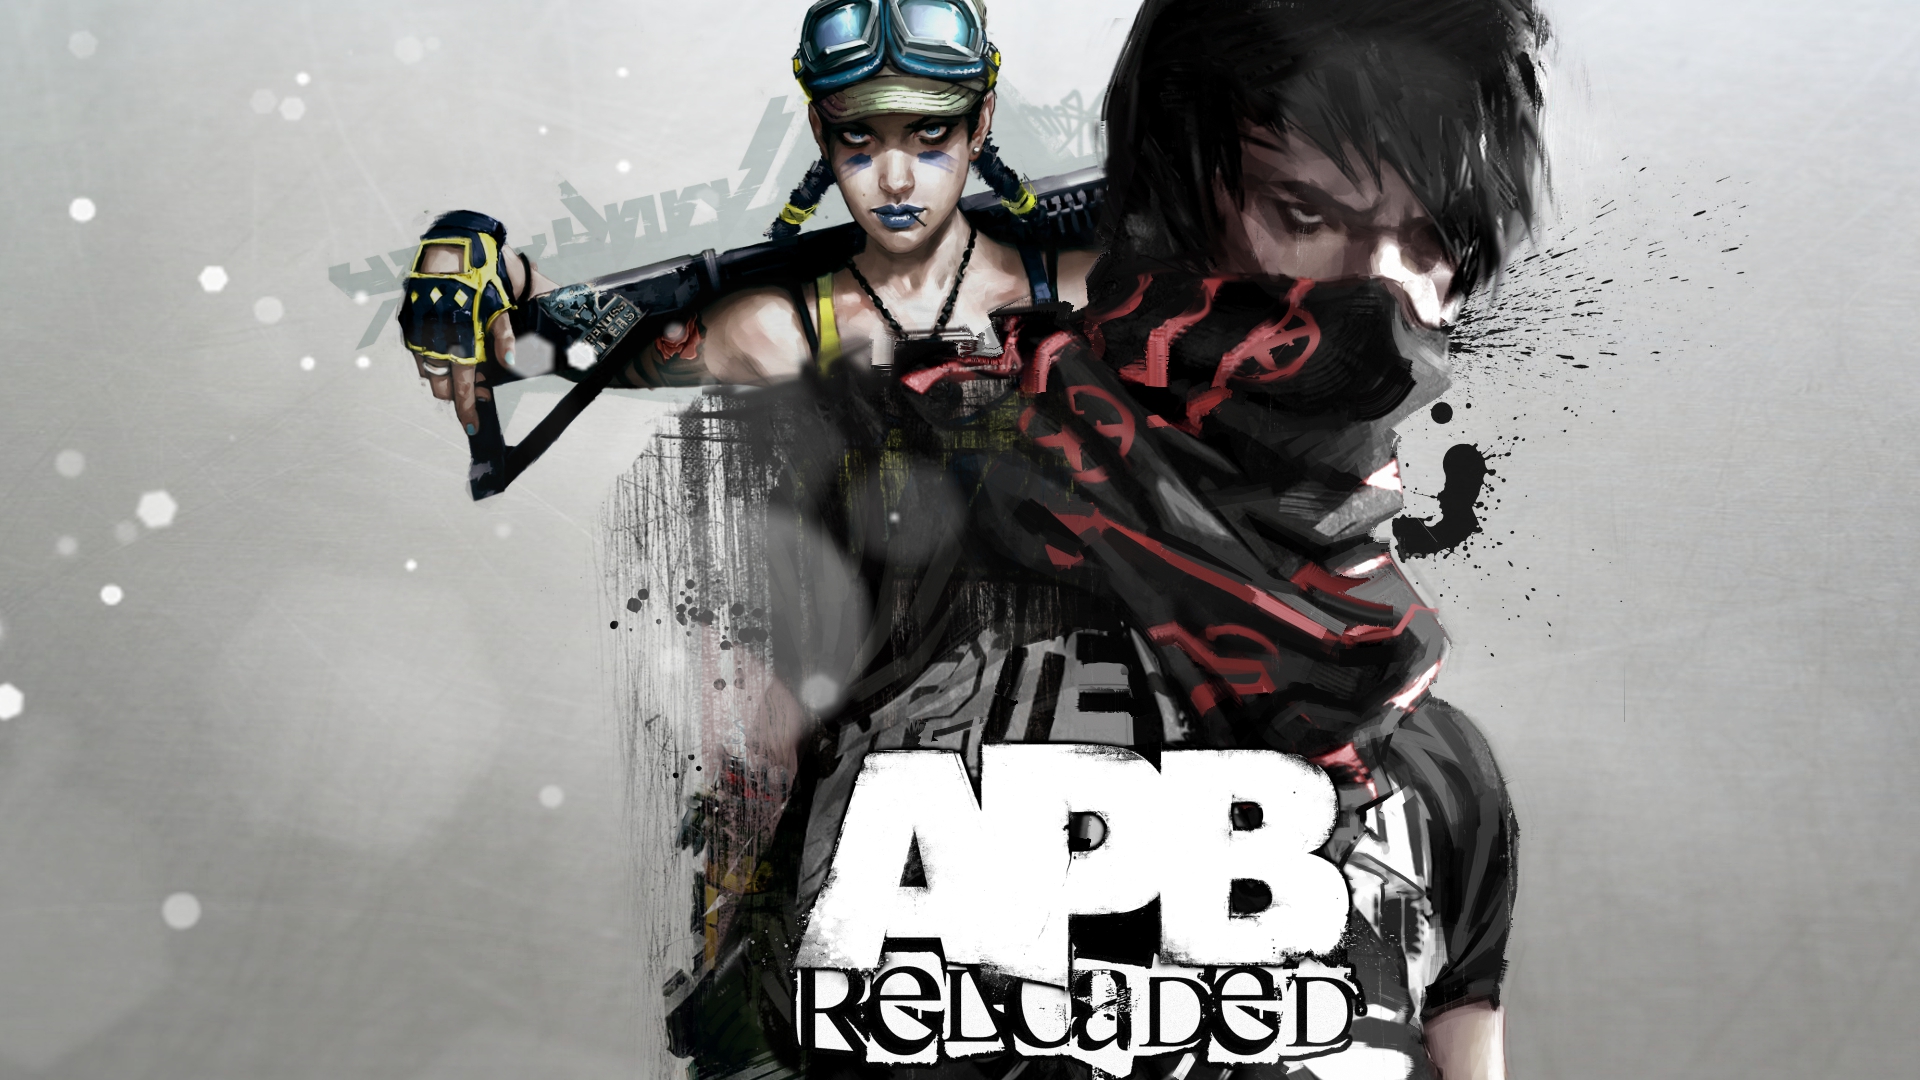 Apb reloaded есть в steam фото 94